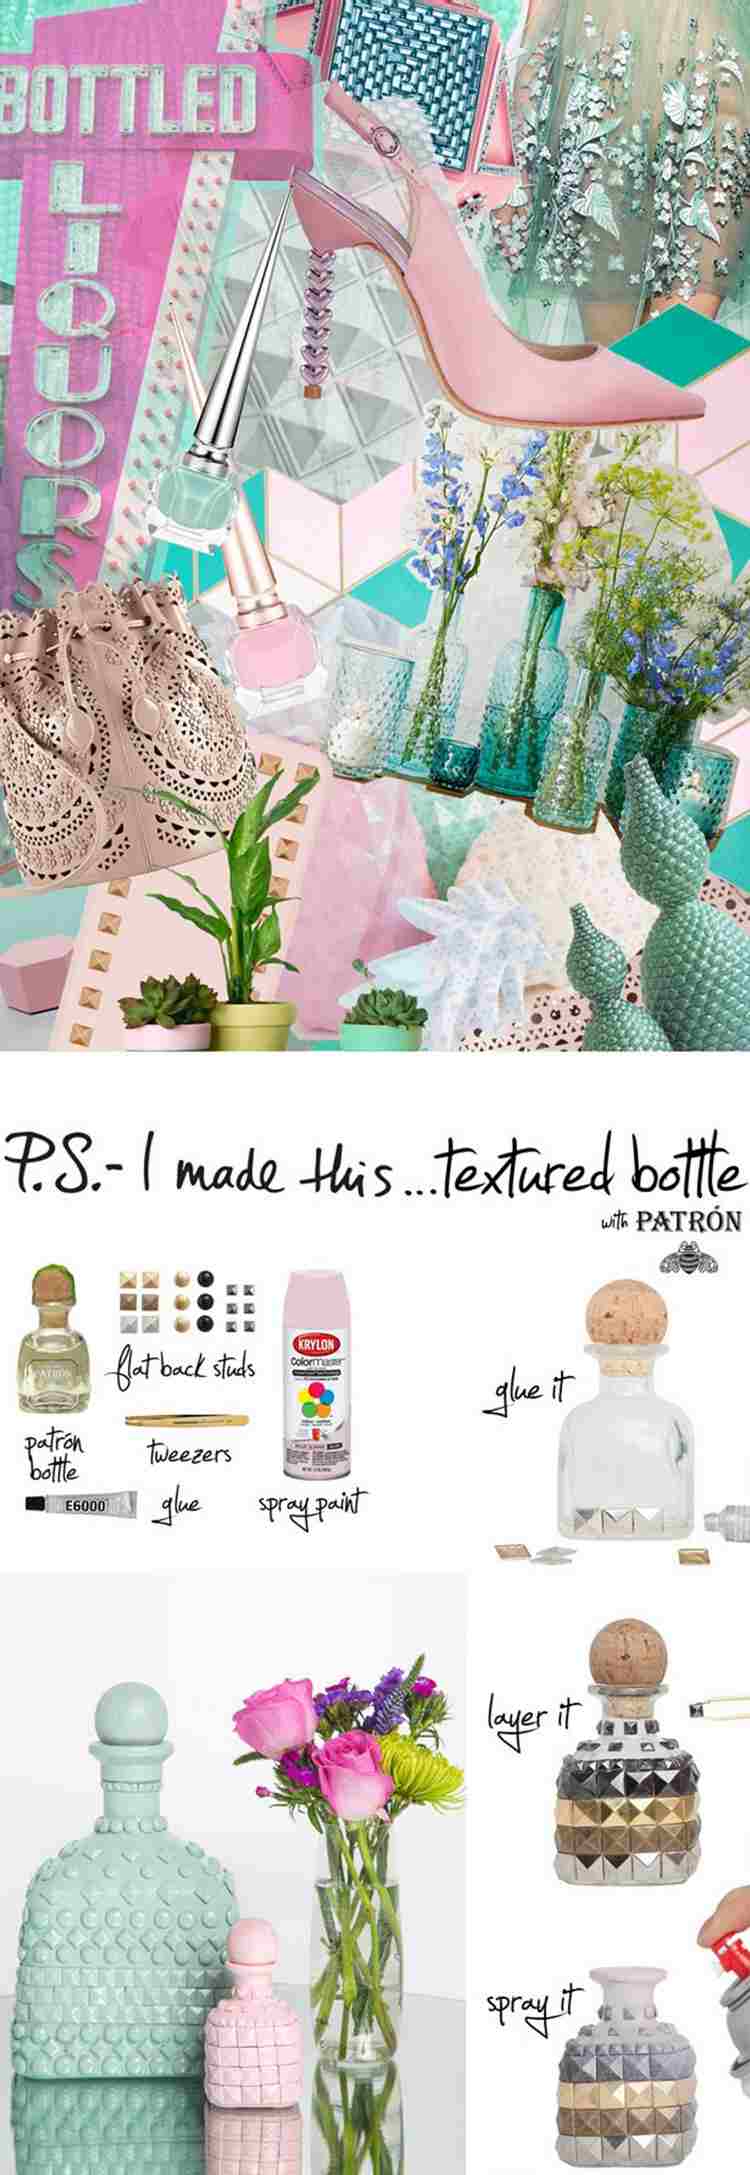 cool-mexer-ideias-adolescentes-meninas-decorar-vasos-garrafas-rebites